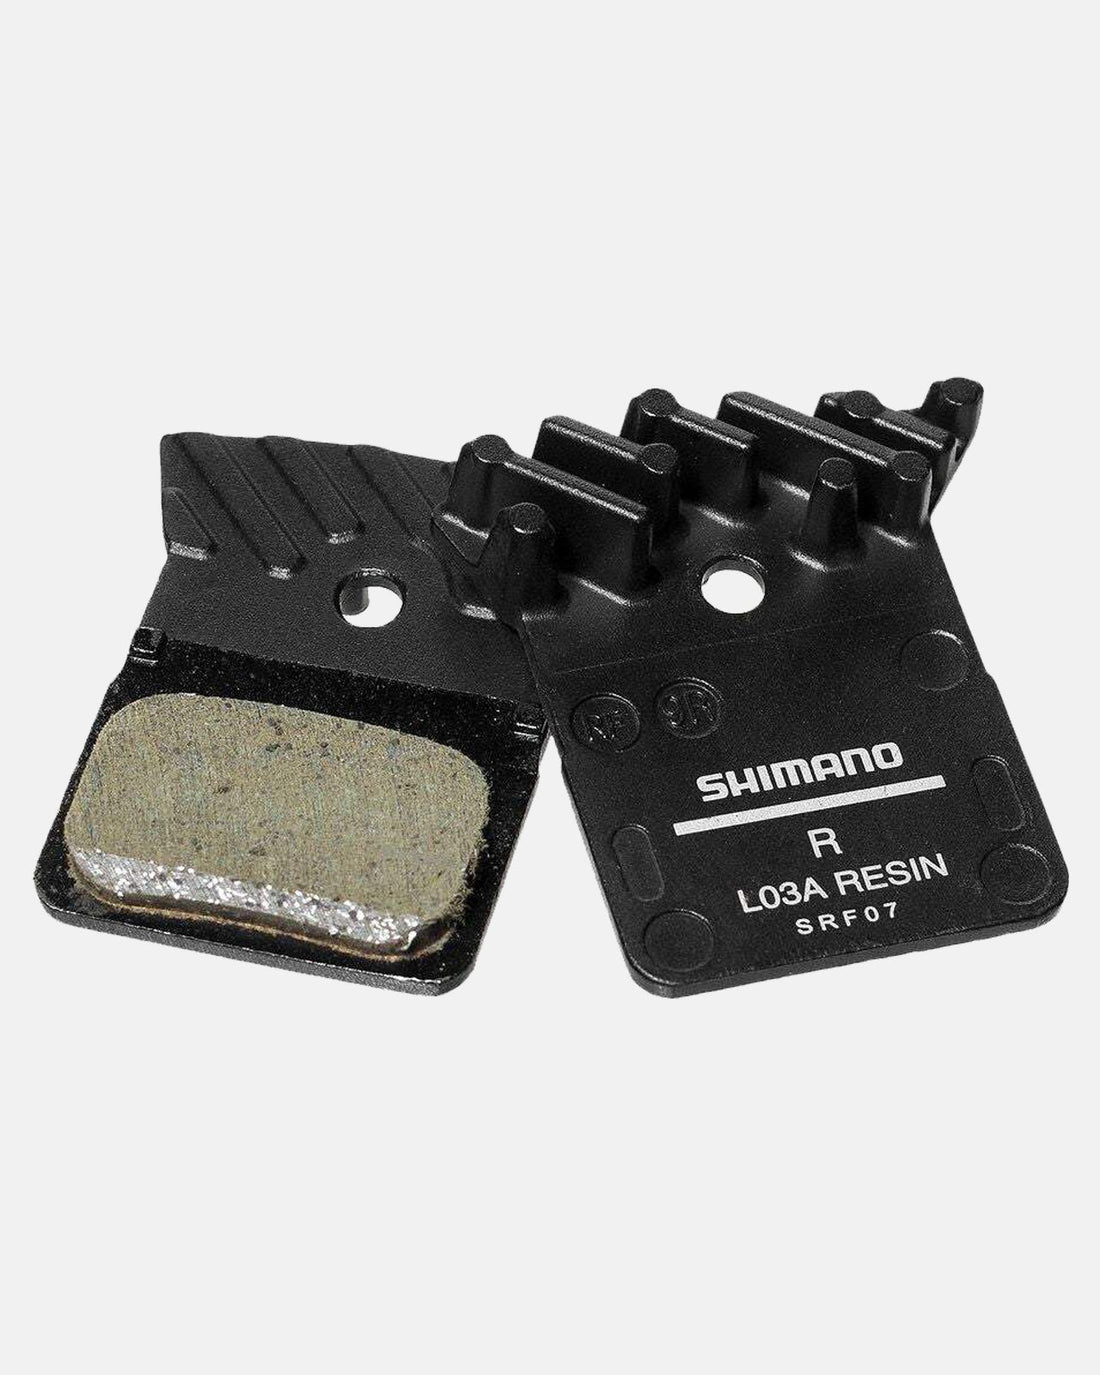 Shimano L03A Resin Disc Brake Pads - Shimano